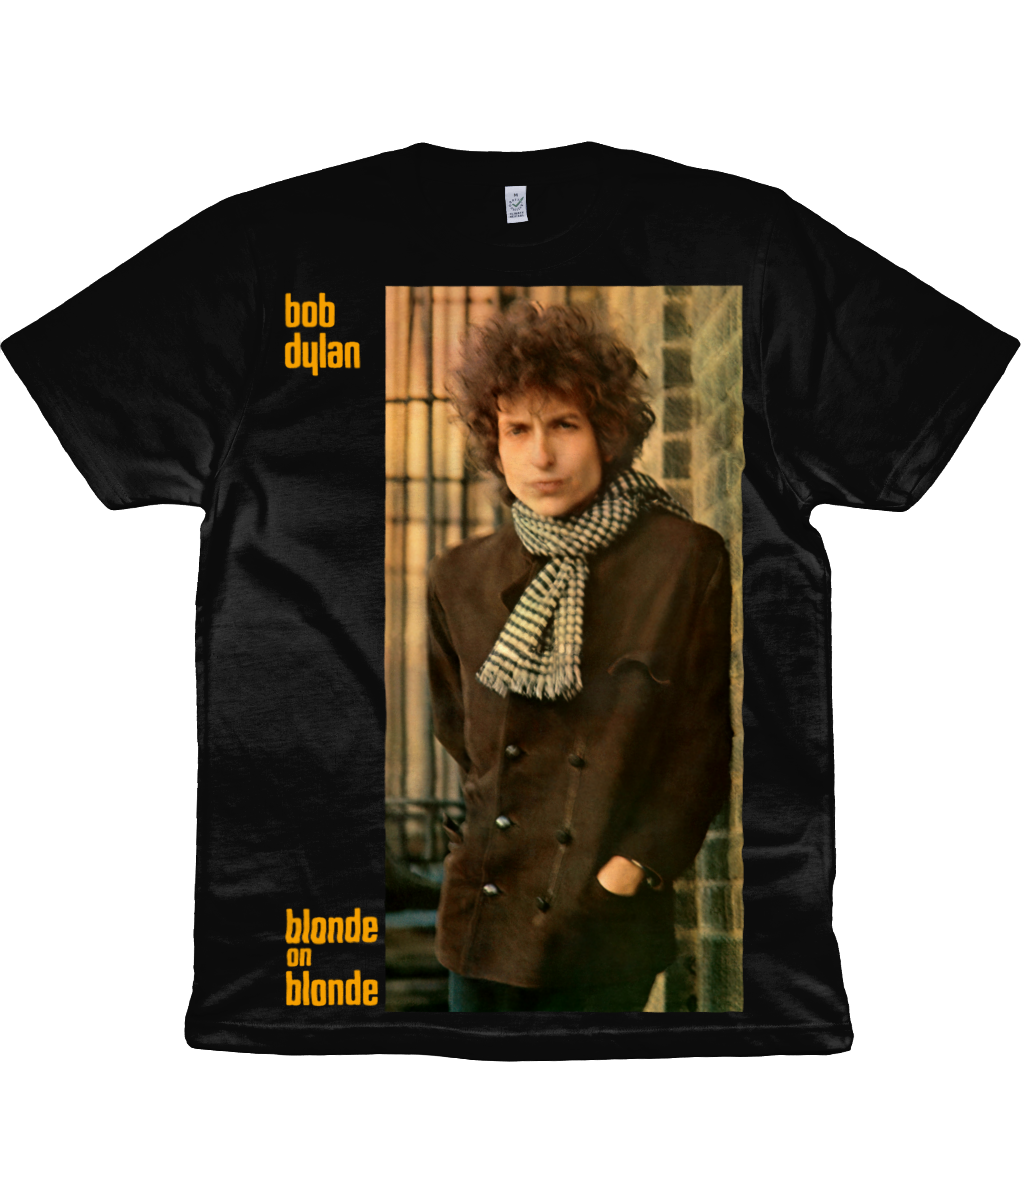 Bob Dylan - Blonde On Blonde - 1966 - Full Portrait